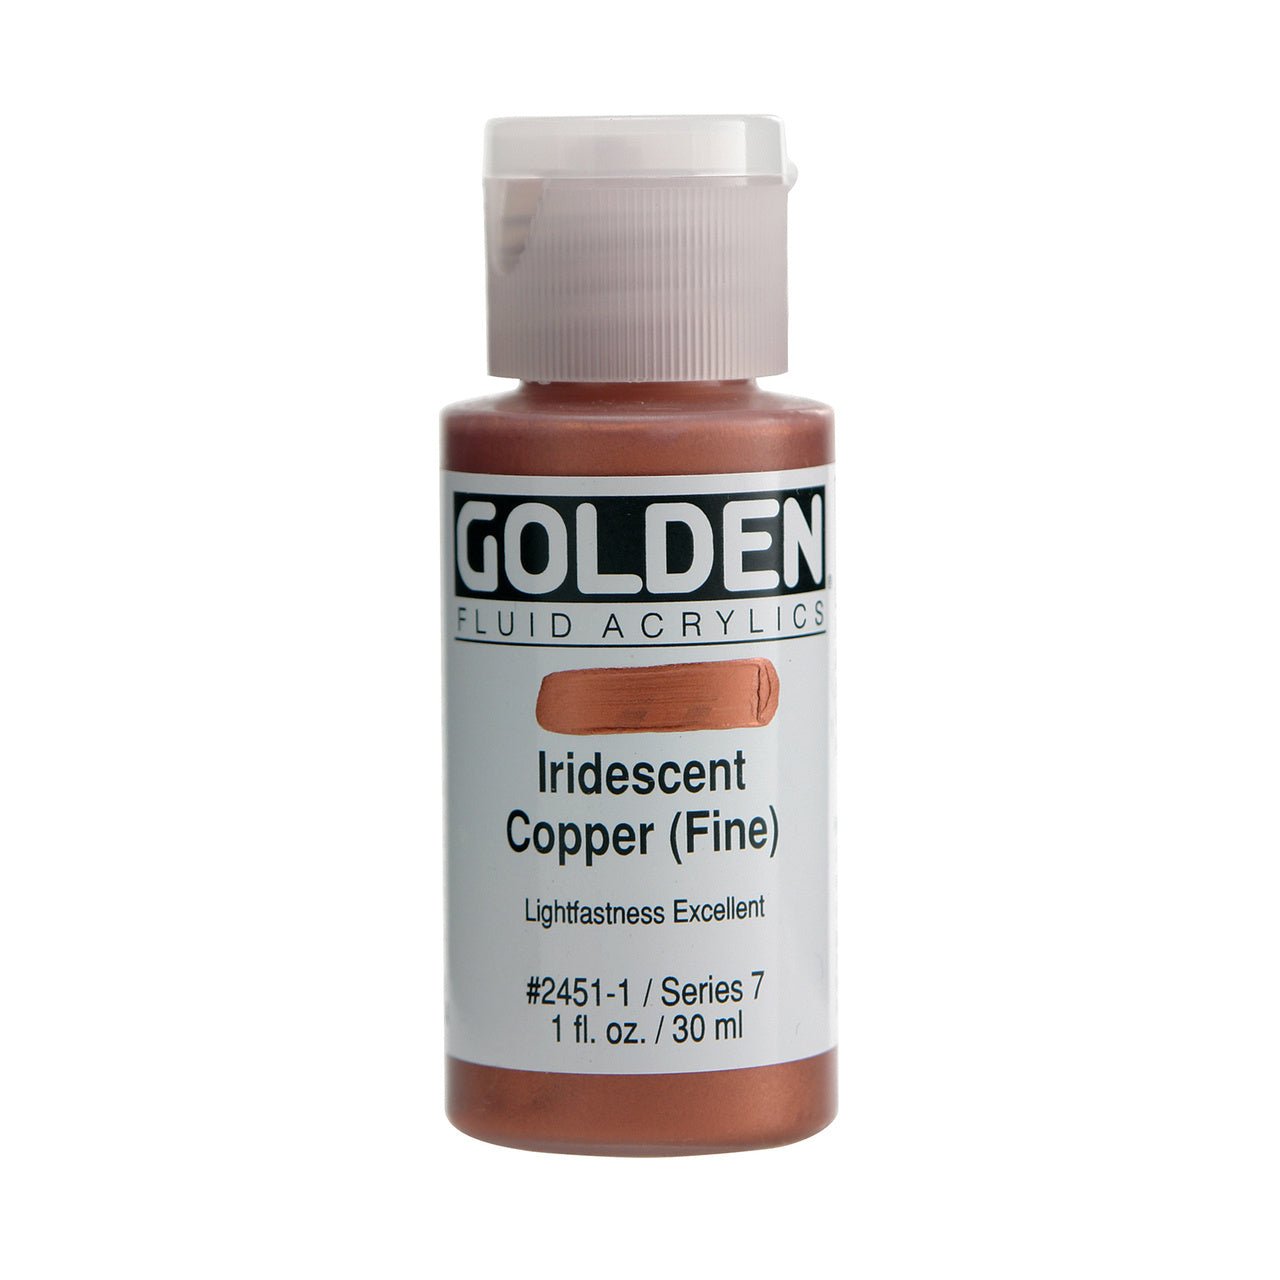 Golden Fluid Acrylic Iridescent Copper (fine) 1 oz - merriartist.com